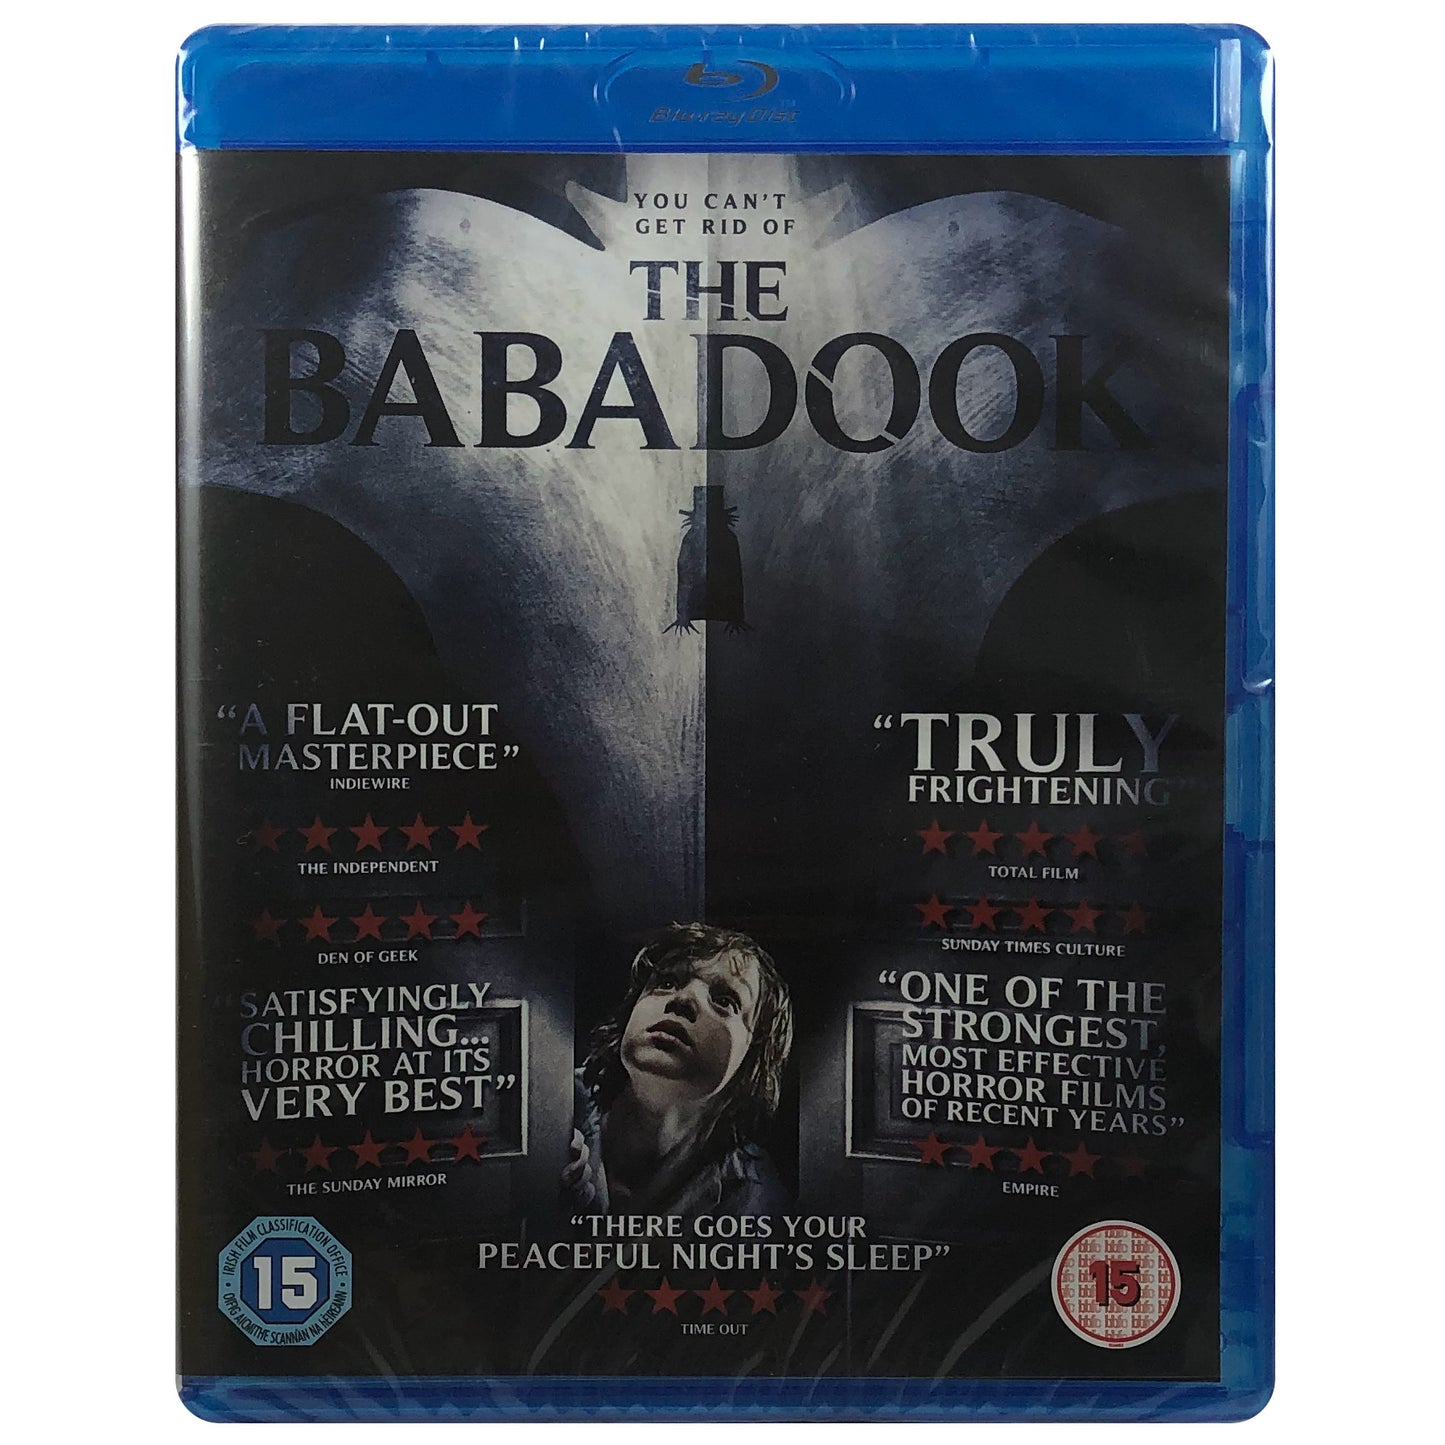 The Babadook Blu-Ray